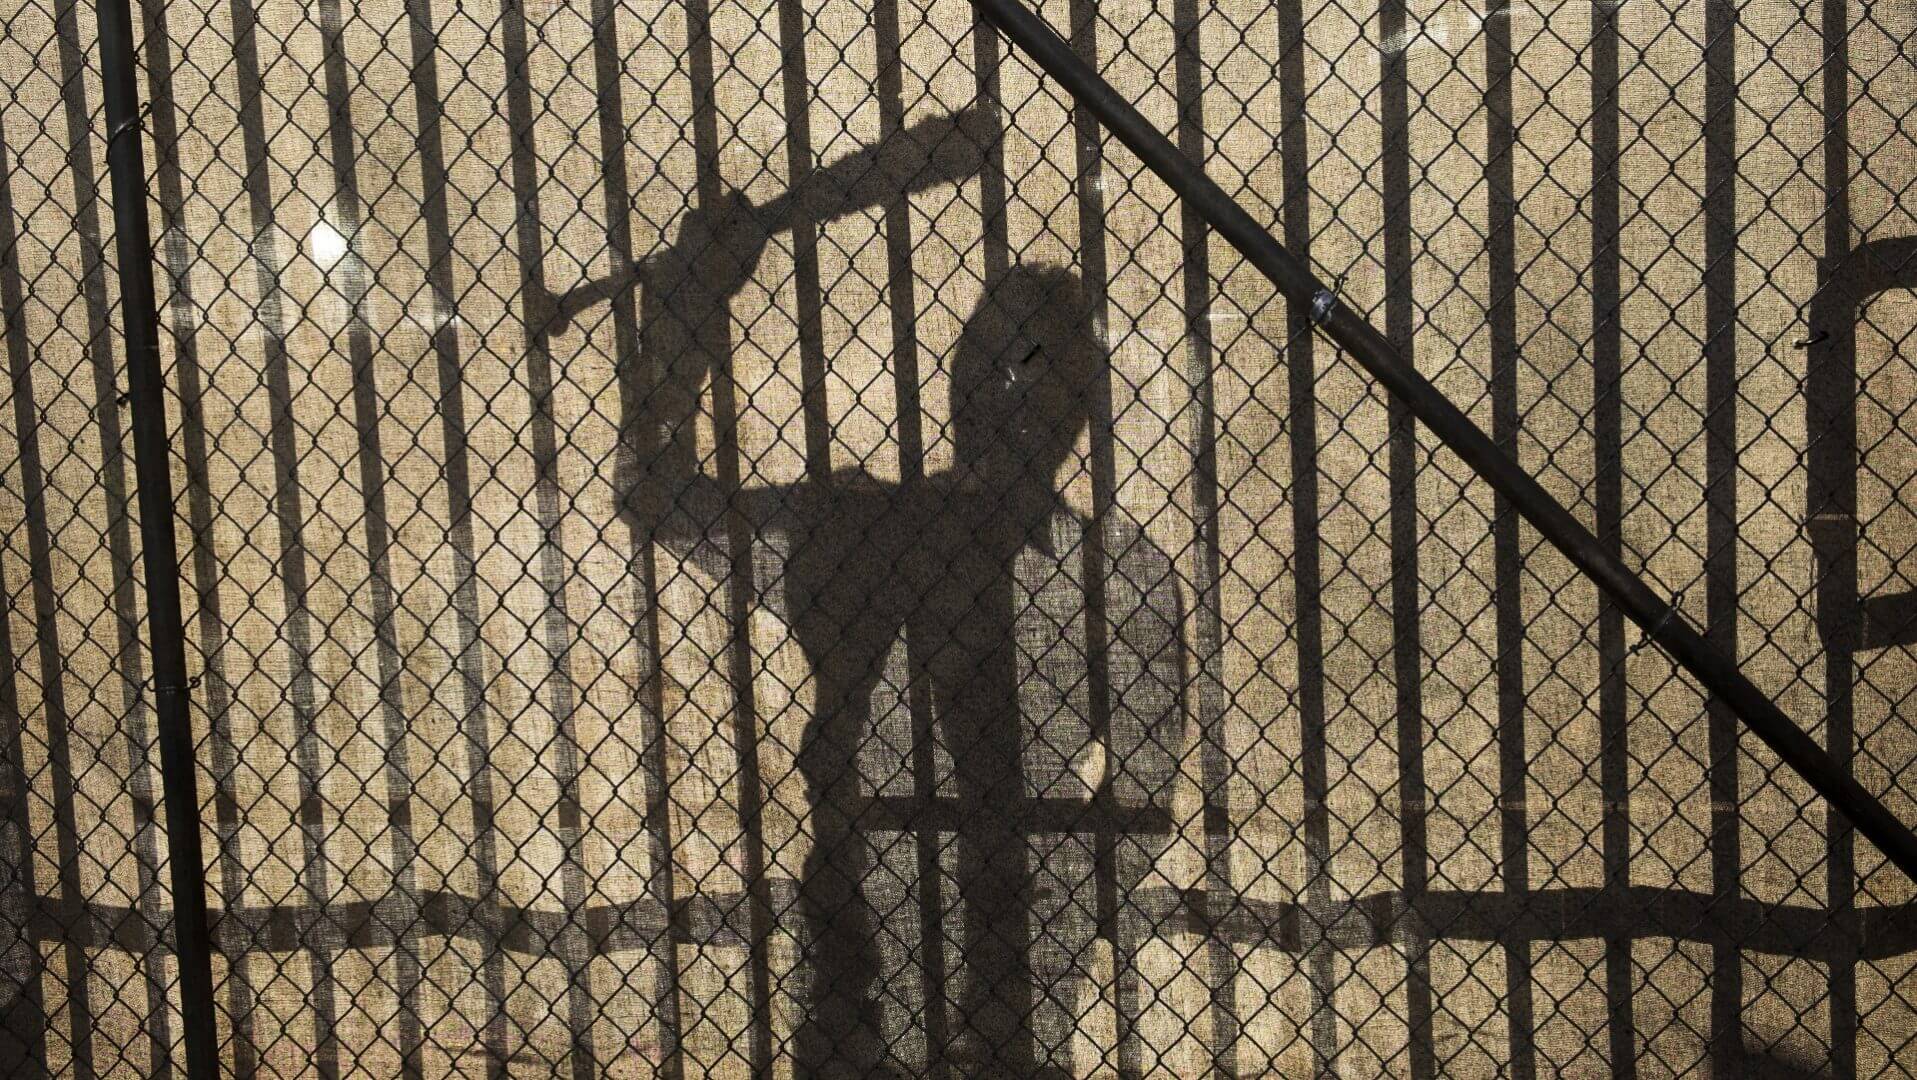 The Walking Dead Negan at the gates of Alexandria